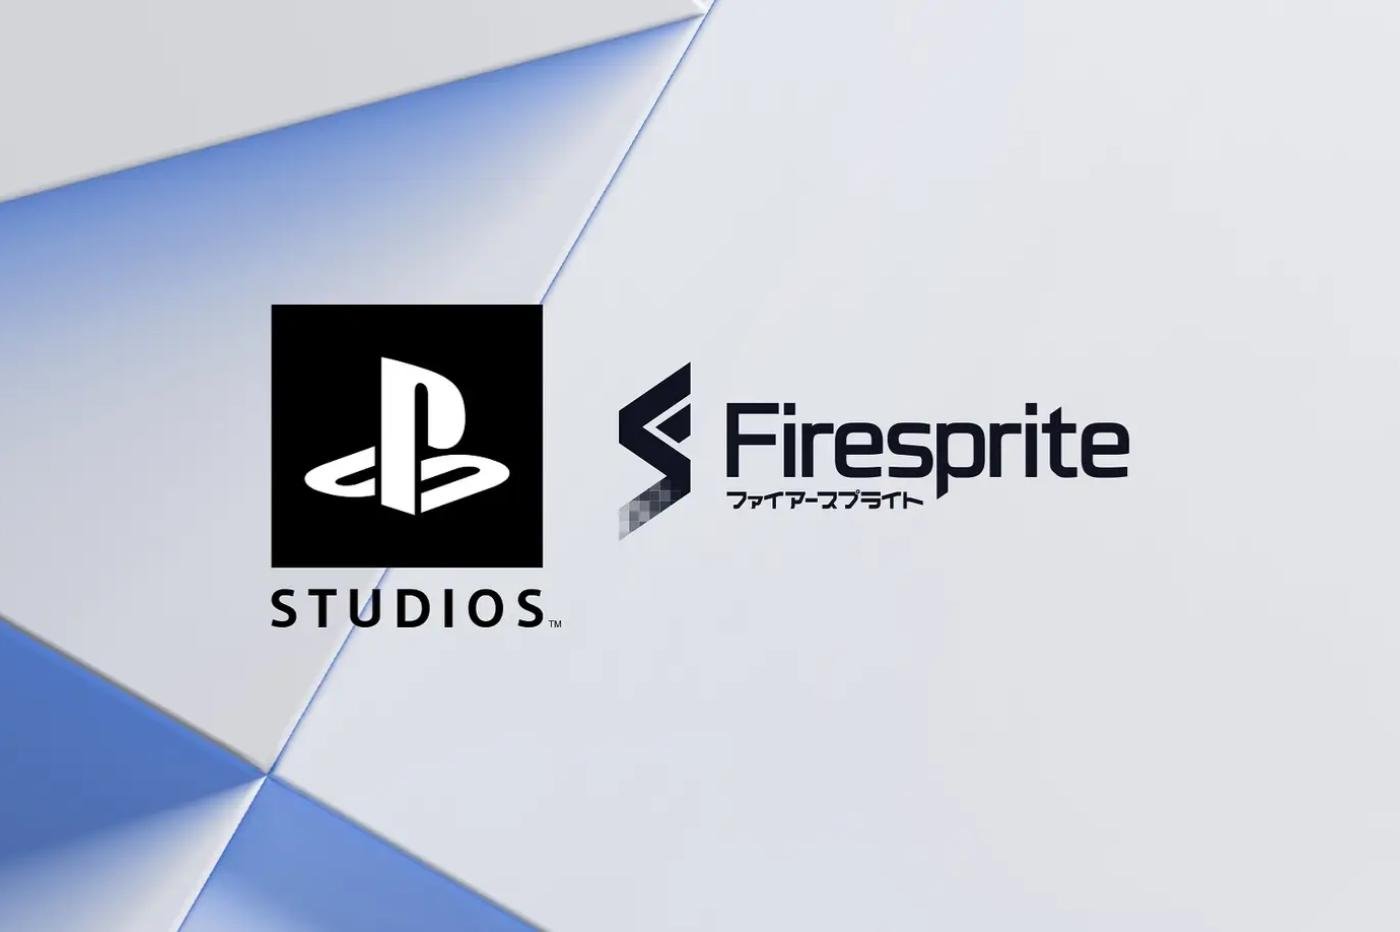 Playstation studios Firesprite Sony